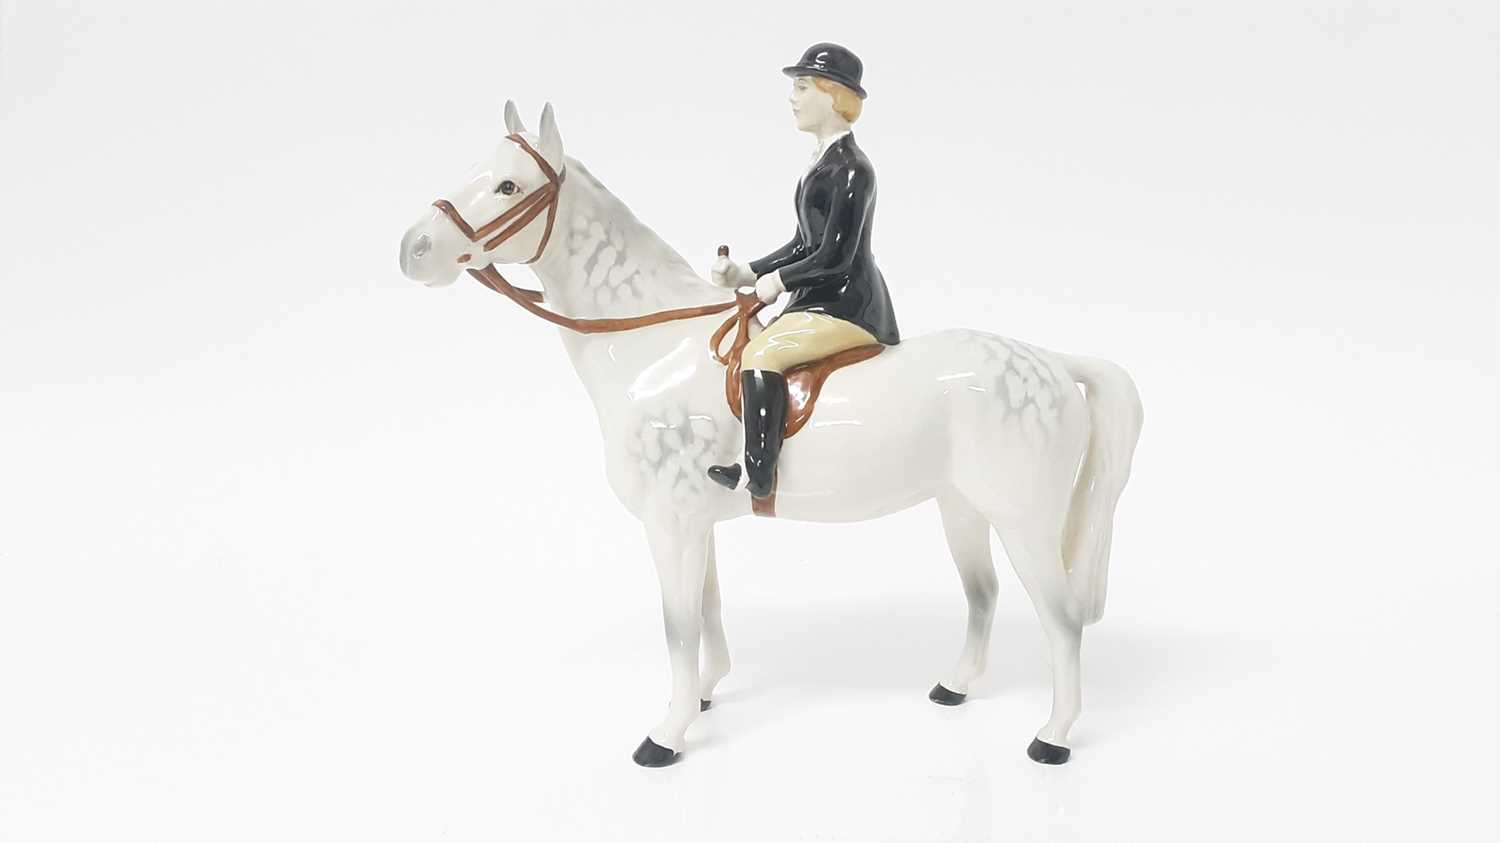 Lot 20 - Beswick Huntswoman, style 2, rider and horse stood still, model no. 1730, designed by Arthur Gredington, 21cm in height